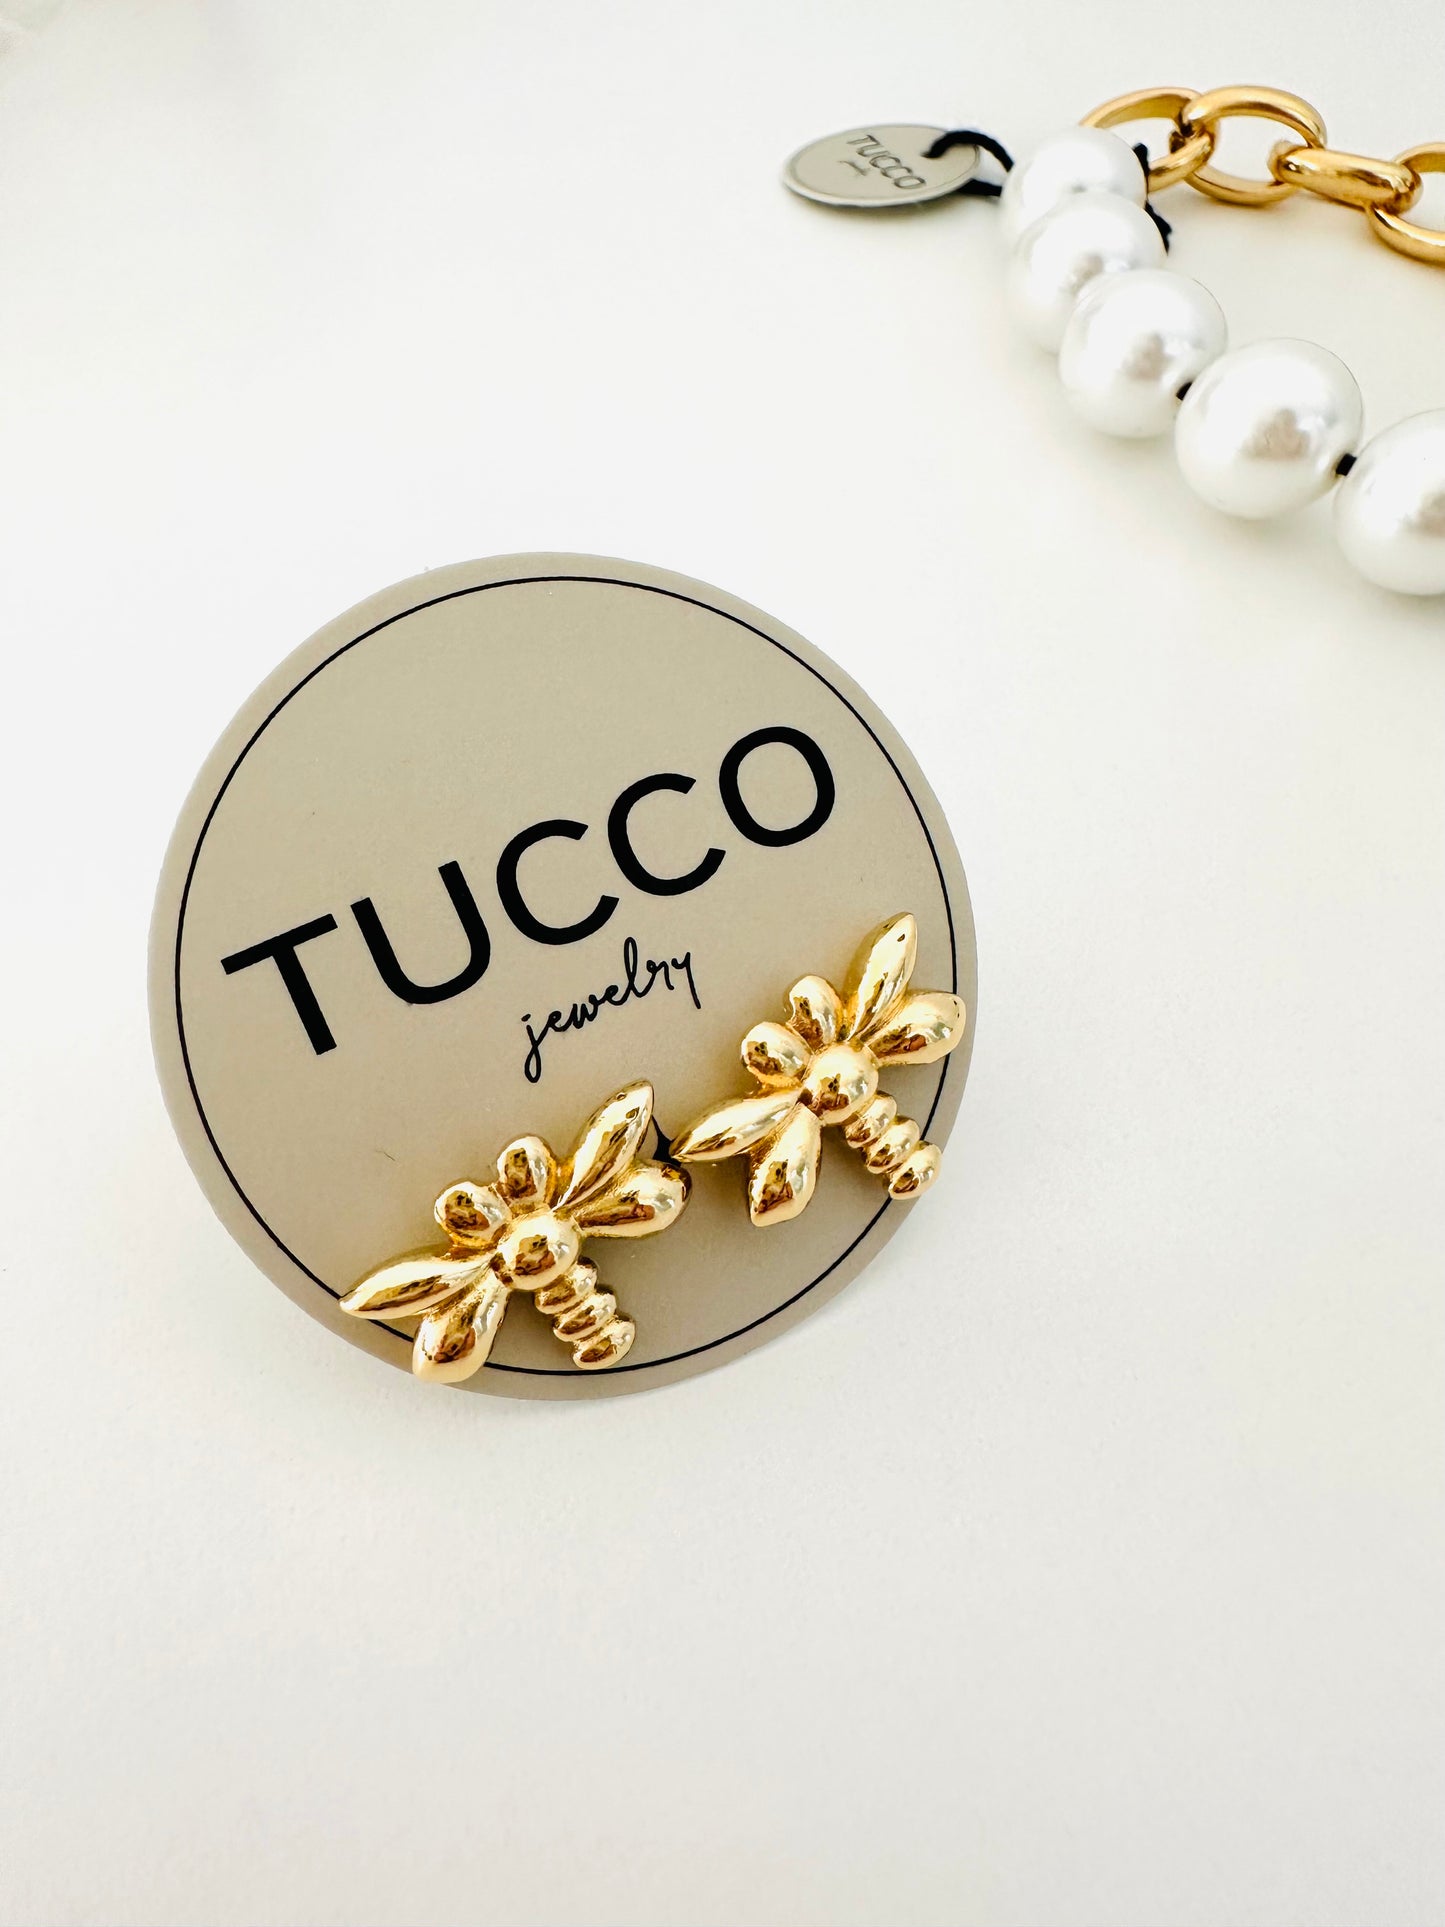 Tucco Gold Libelula Collection